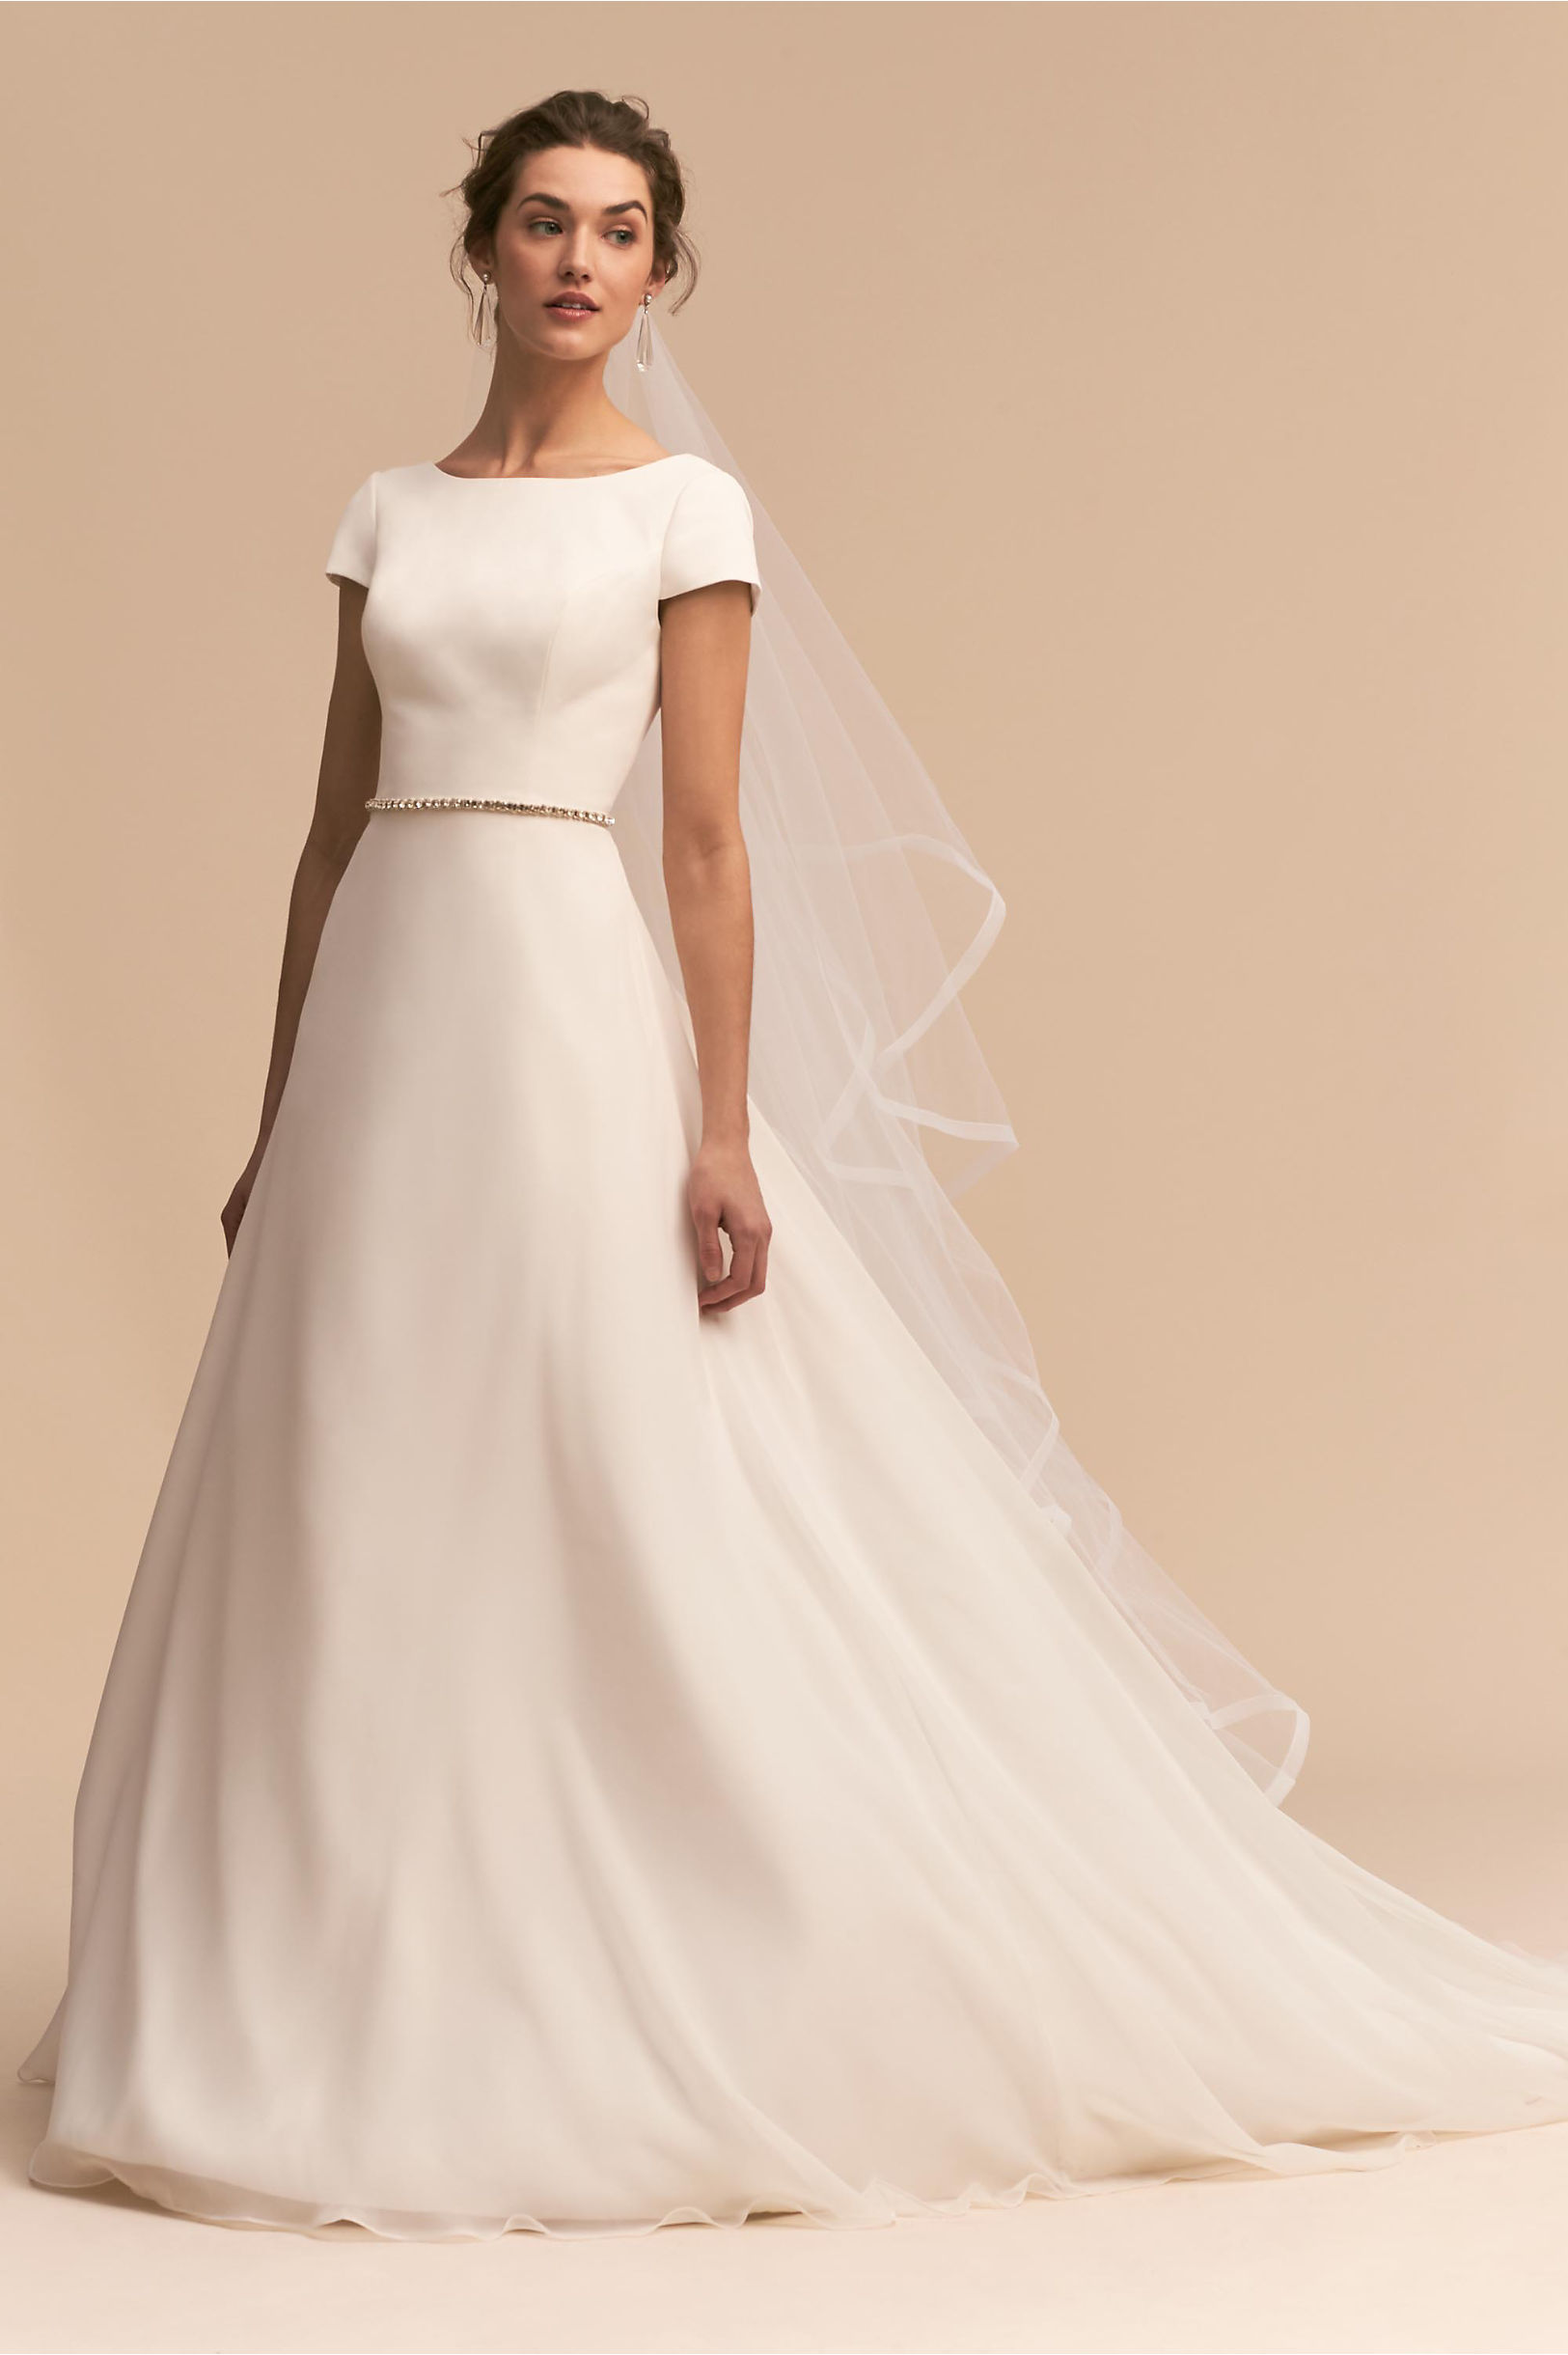 12 Most Romantic Wedding Dresses Ever | Emmaline Bride